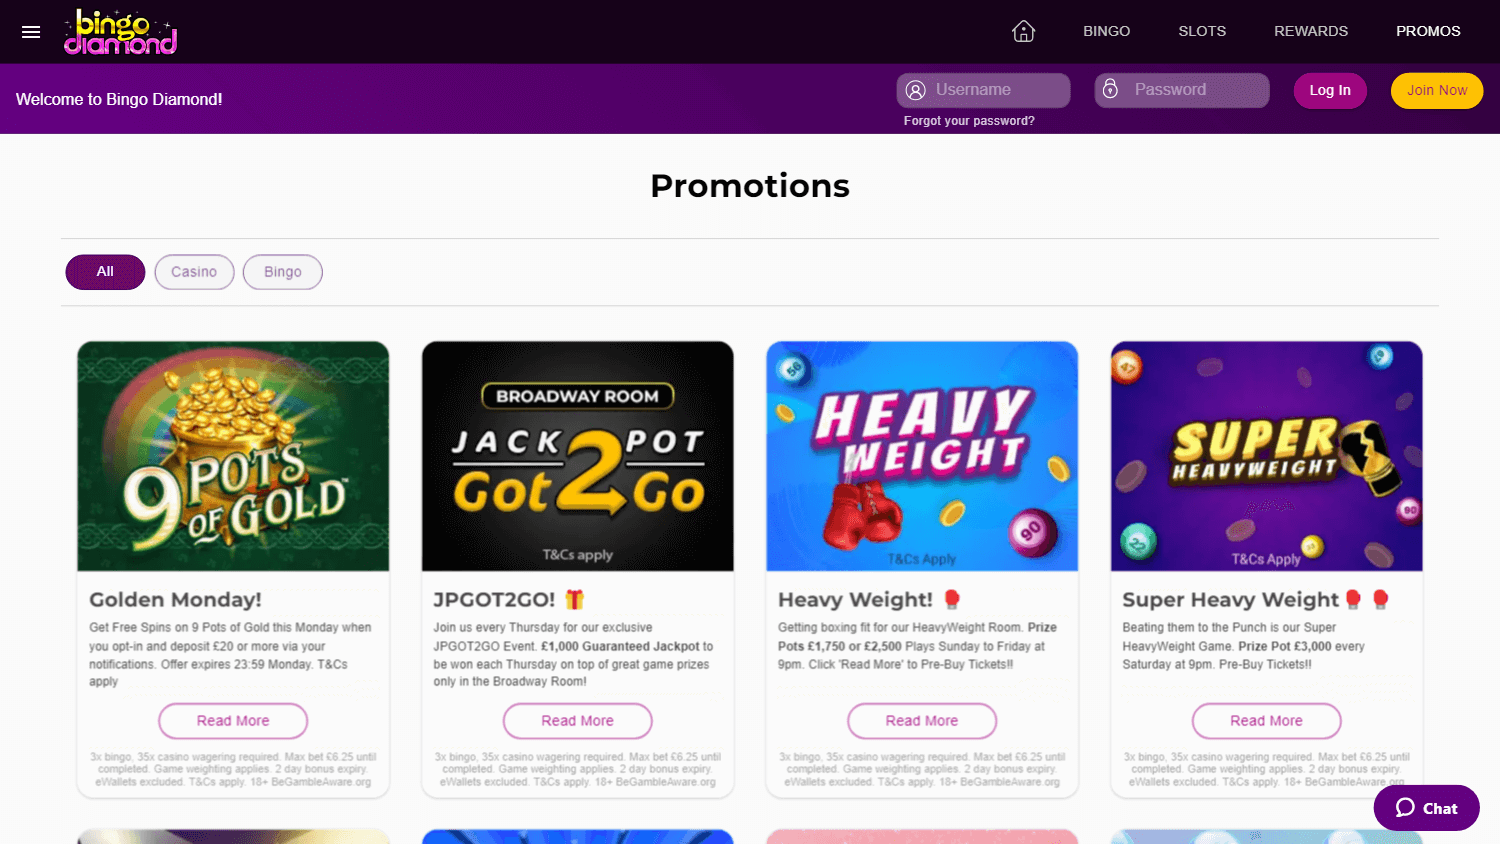 bingo_diamond_casino_promotions_desktop